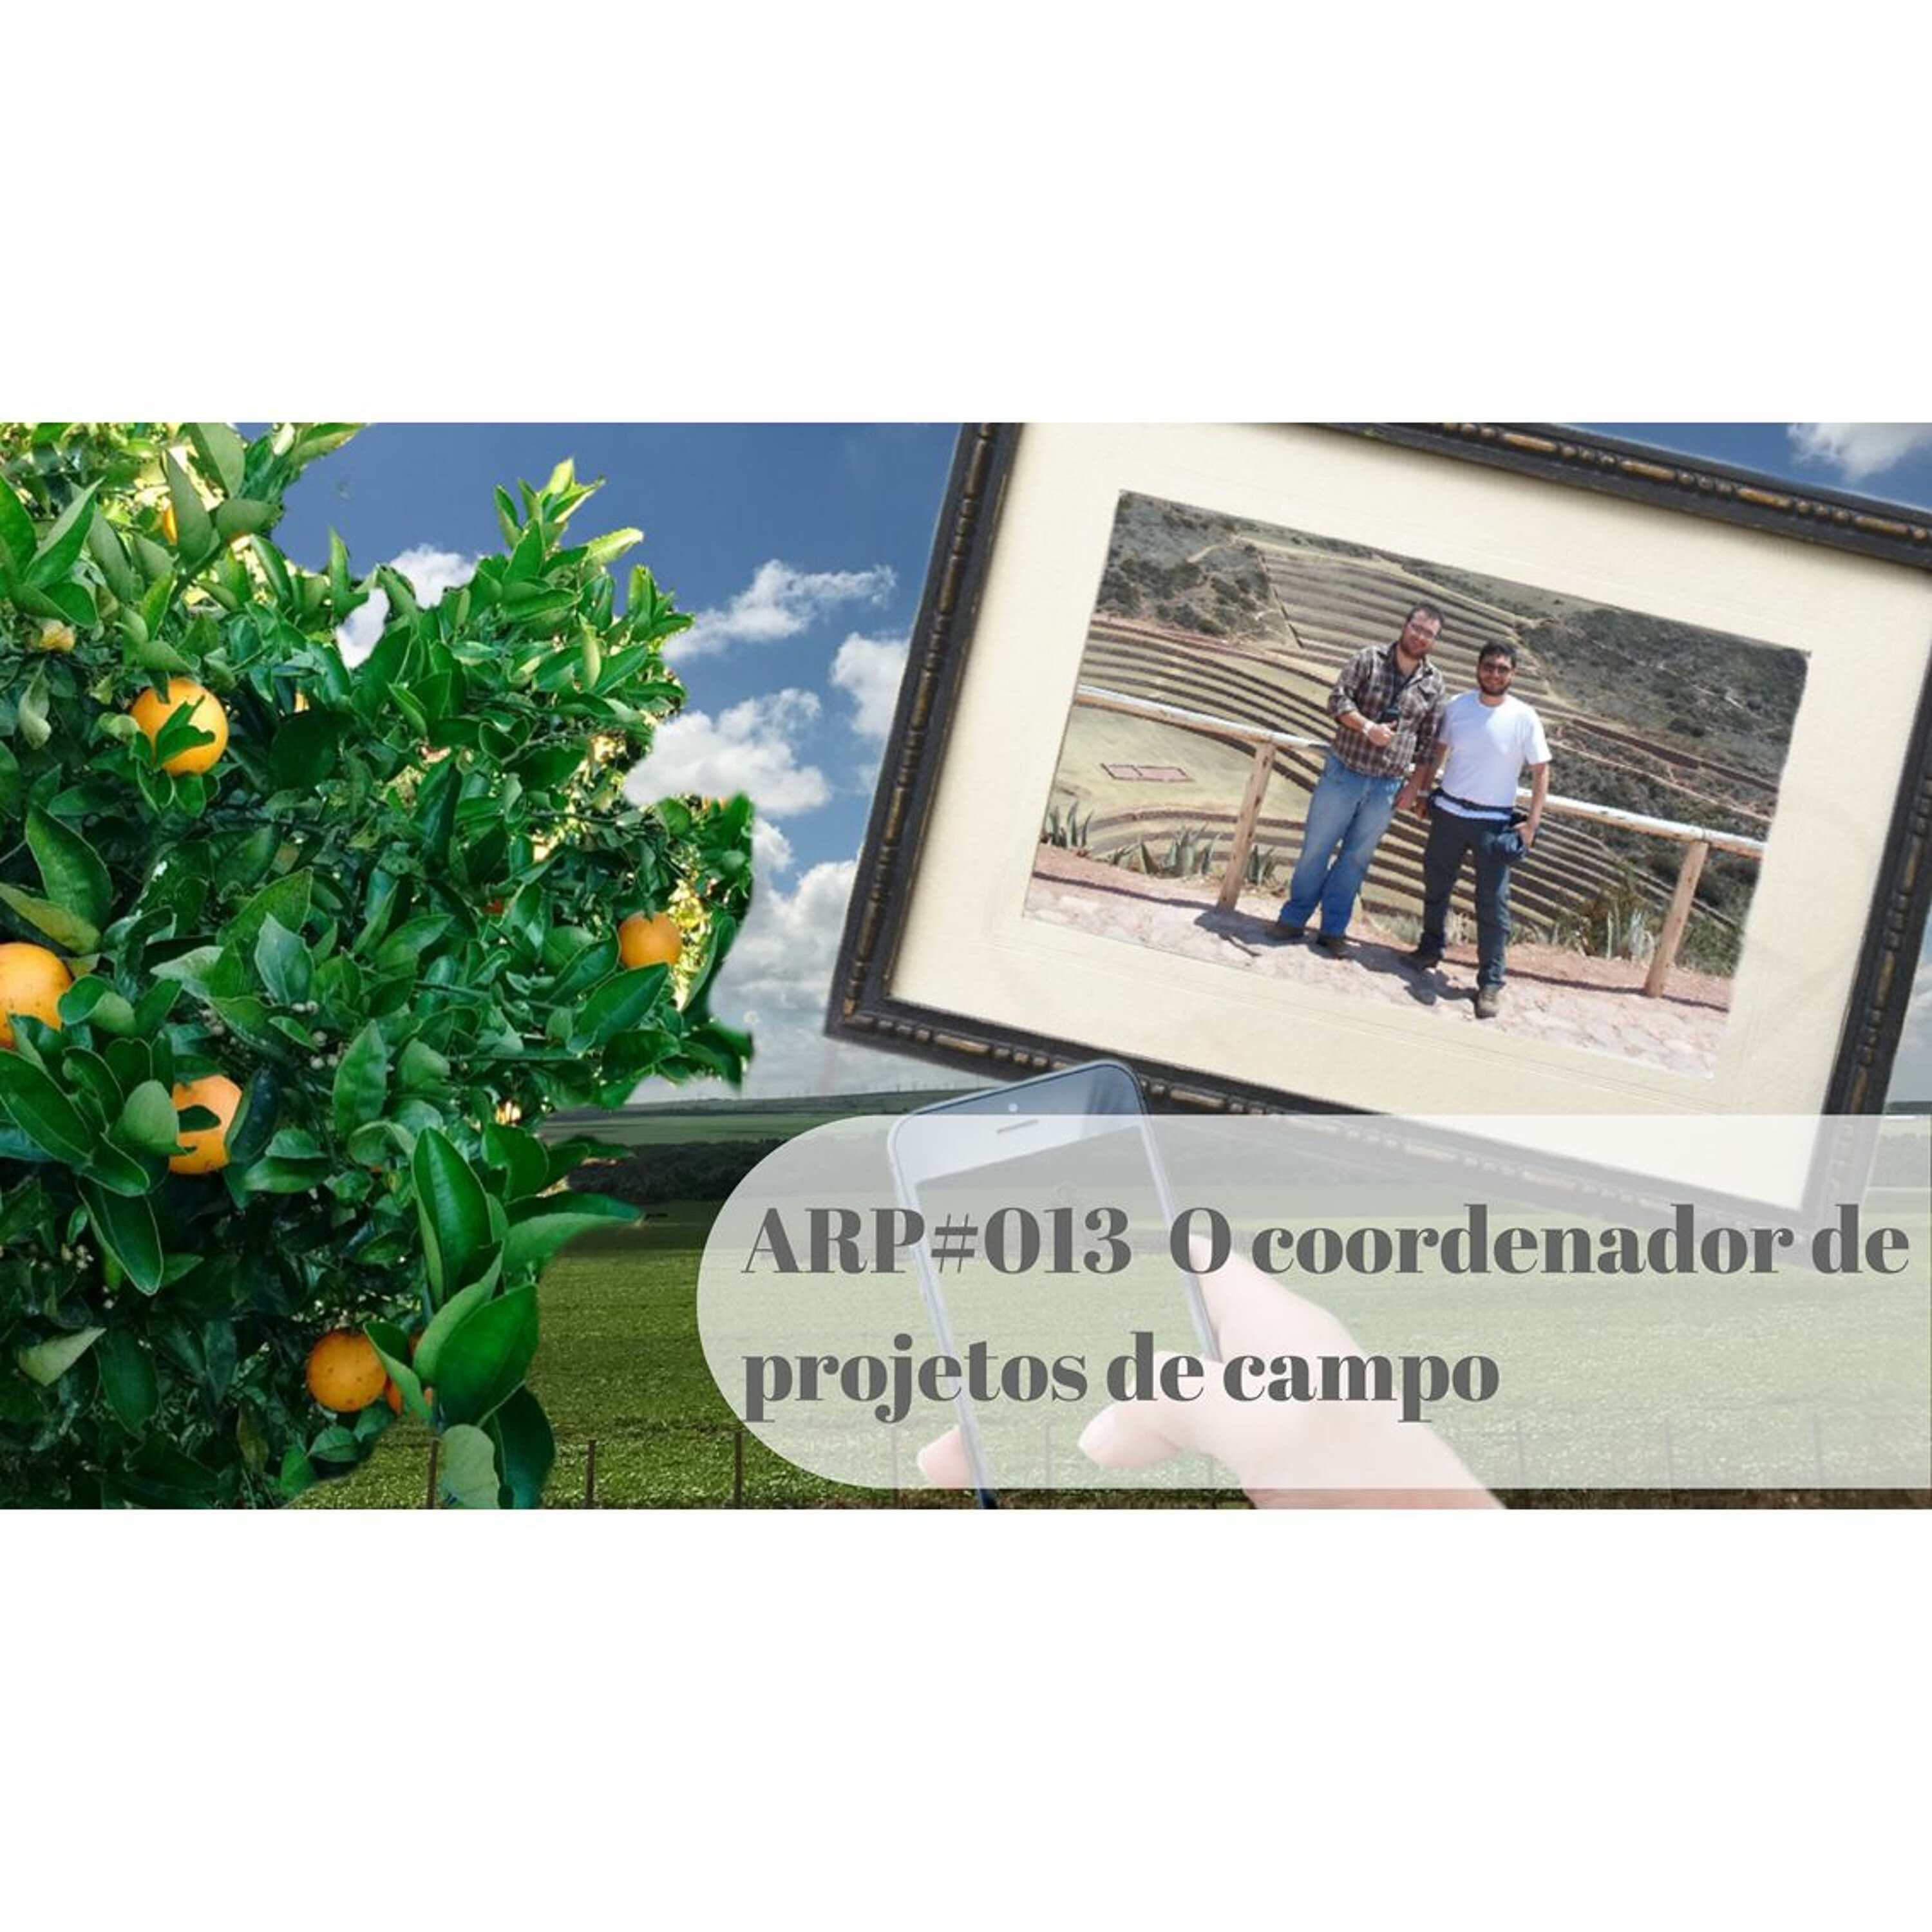 ARP#013 - O coordenador de projetos de campo